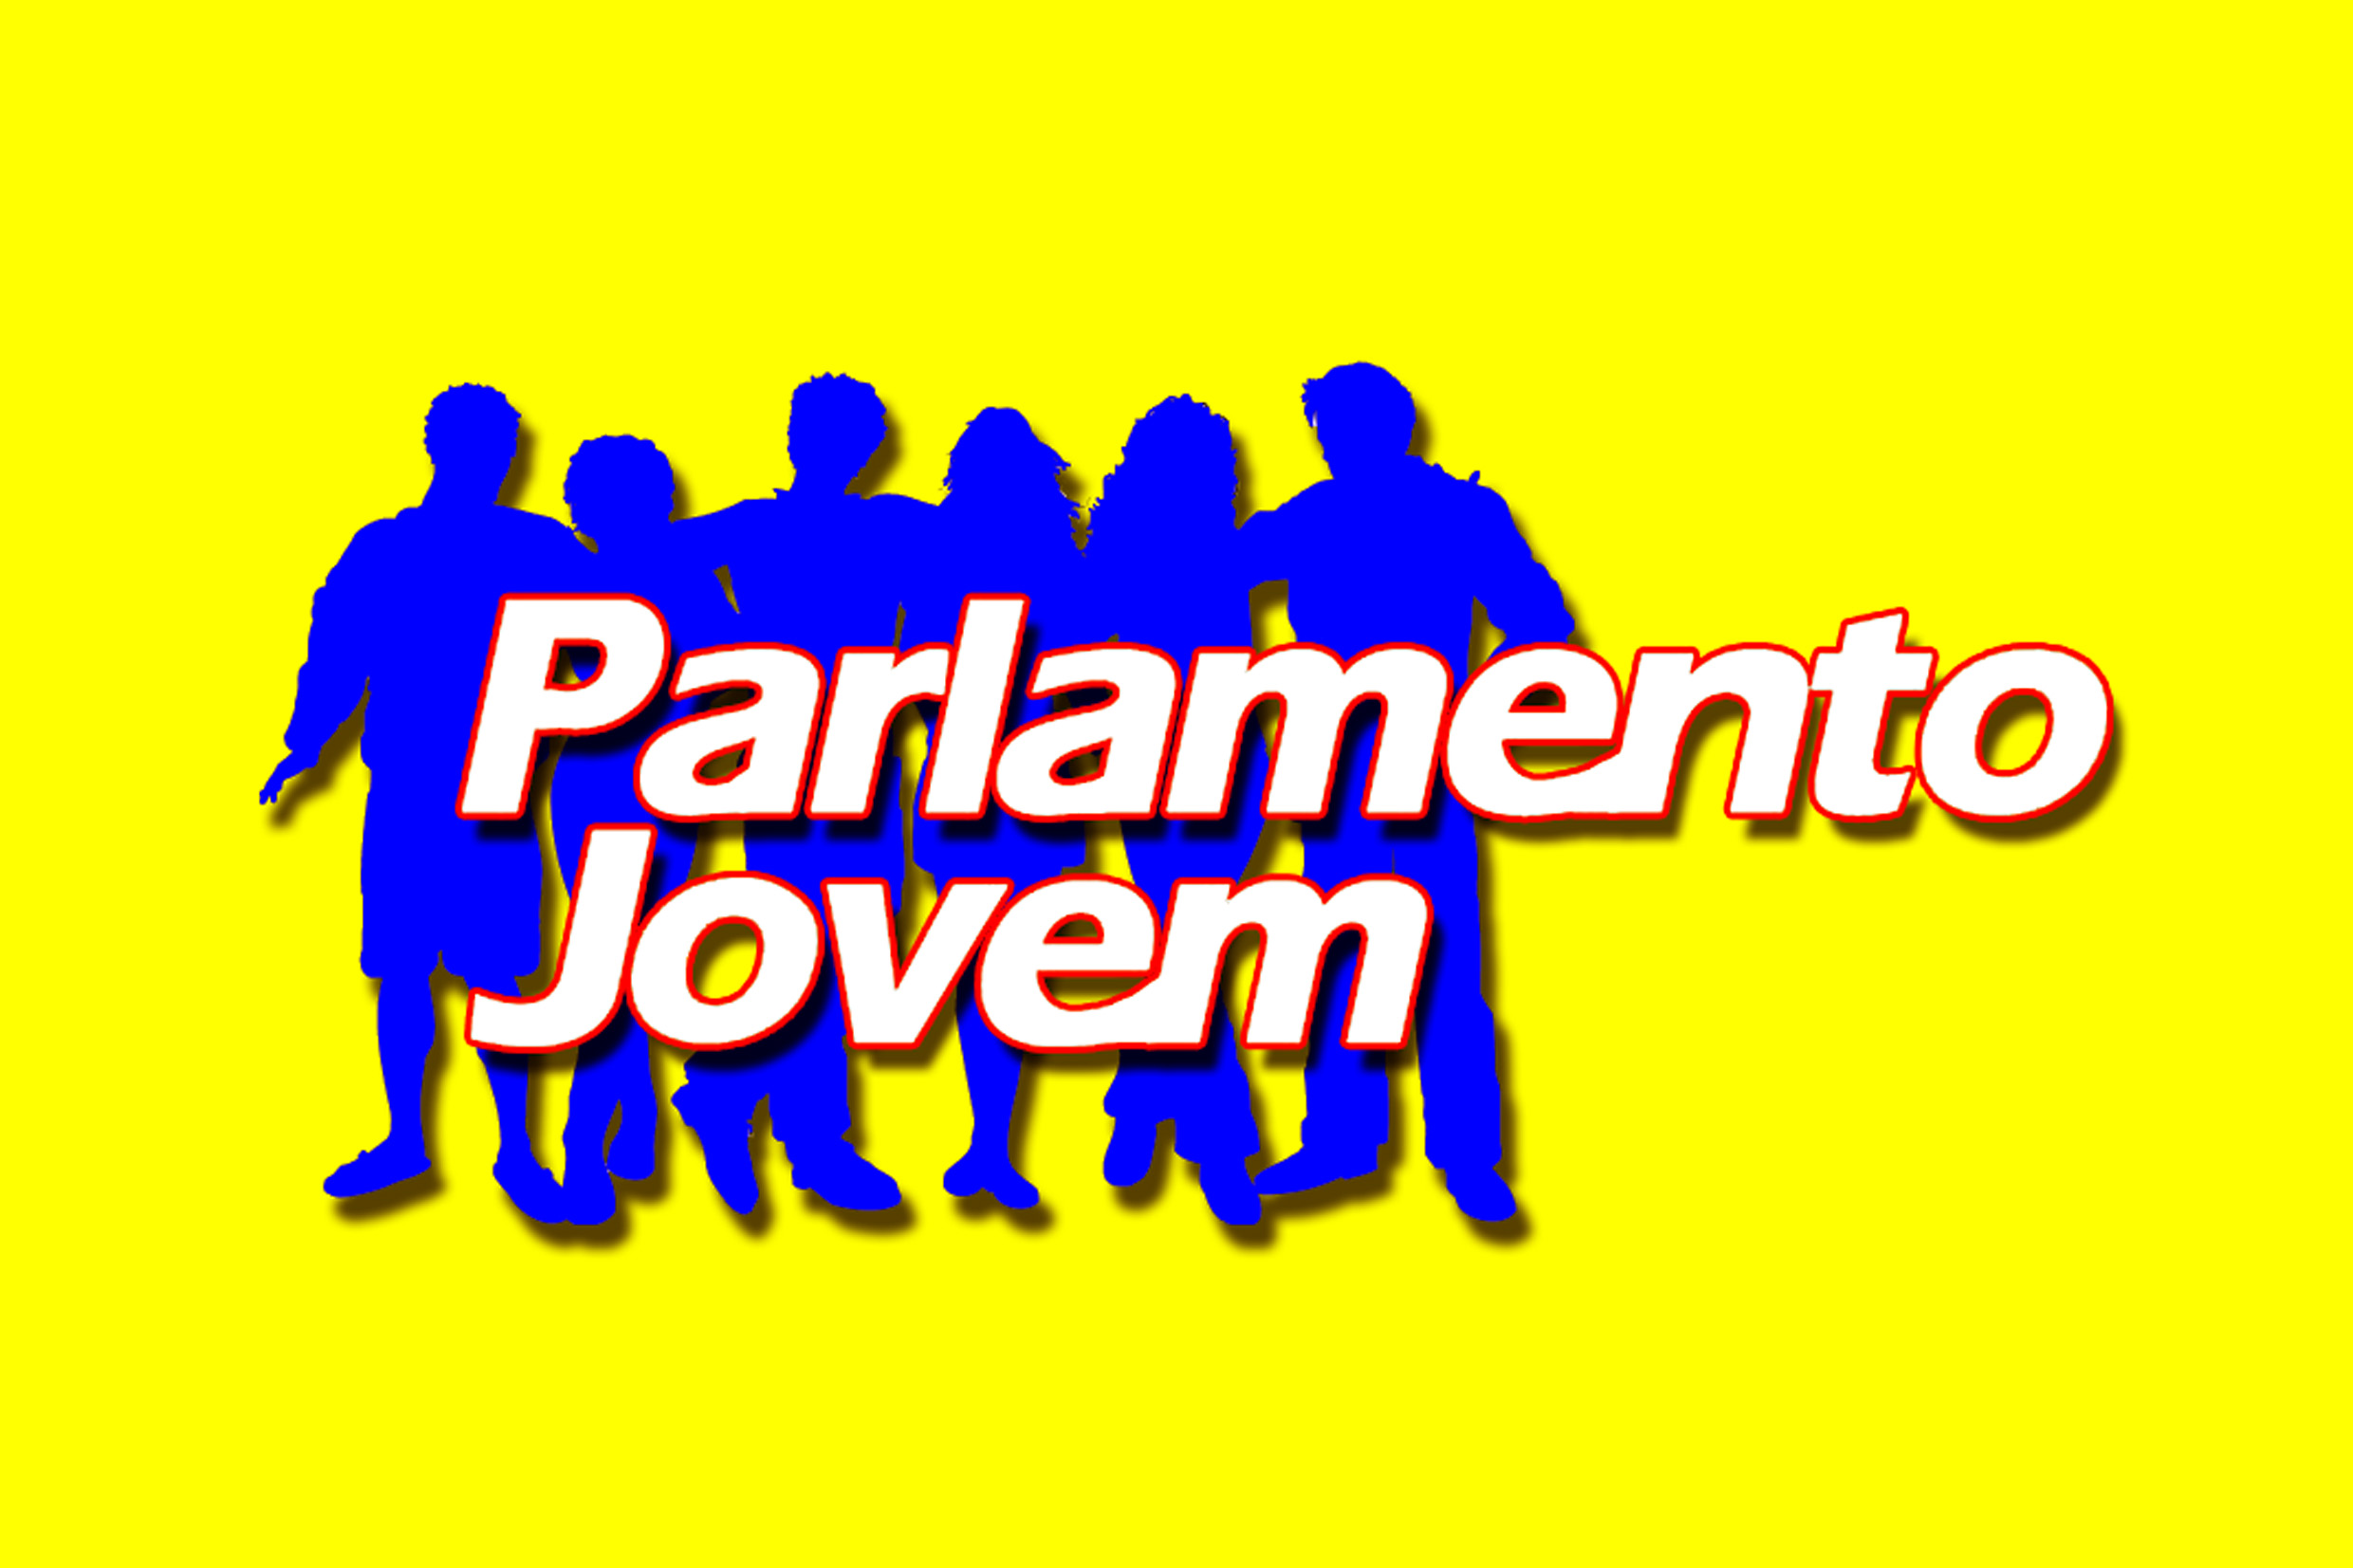 Parlamento Jovem <a style='float:right;color:#ccc' href='https://www3.al.sp.gov.br/repositorio/noticia/N-12-2016/fg197973.jpg' target=_blank><i class='bi bi-zoom-in'></i> Clique para ver a imagem </a>